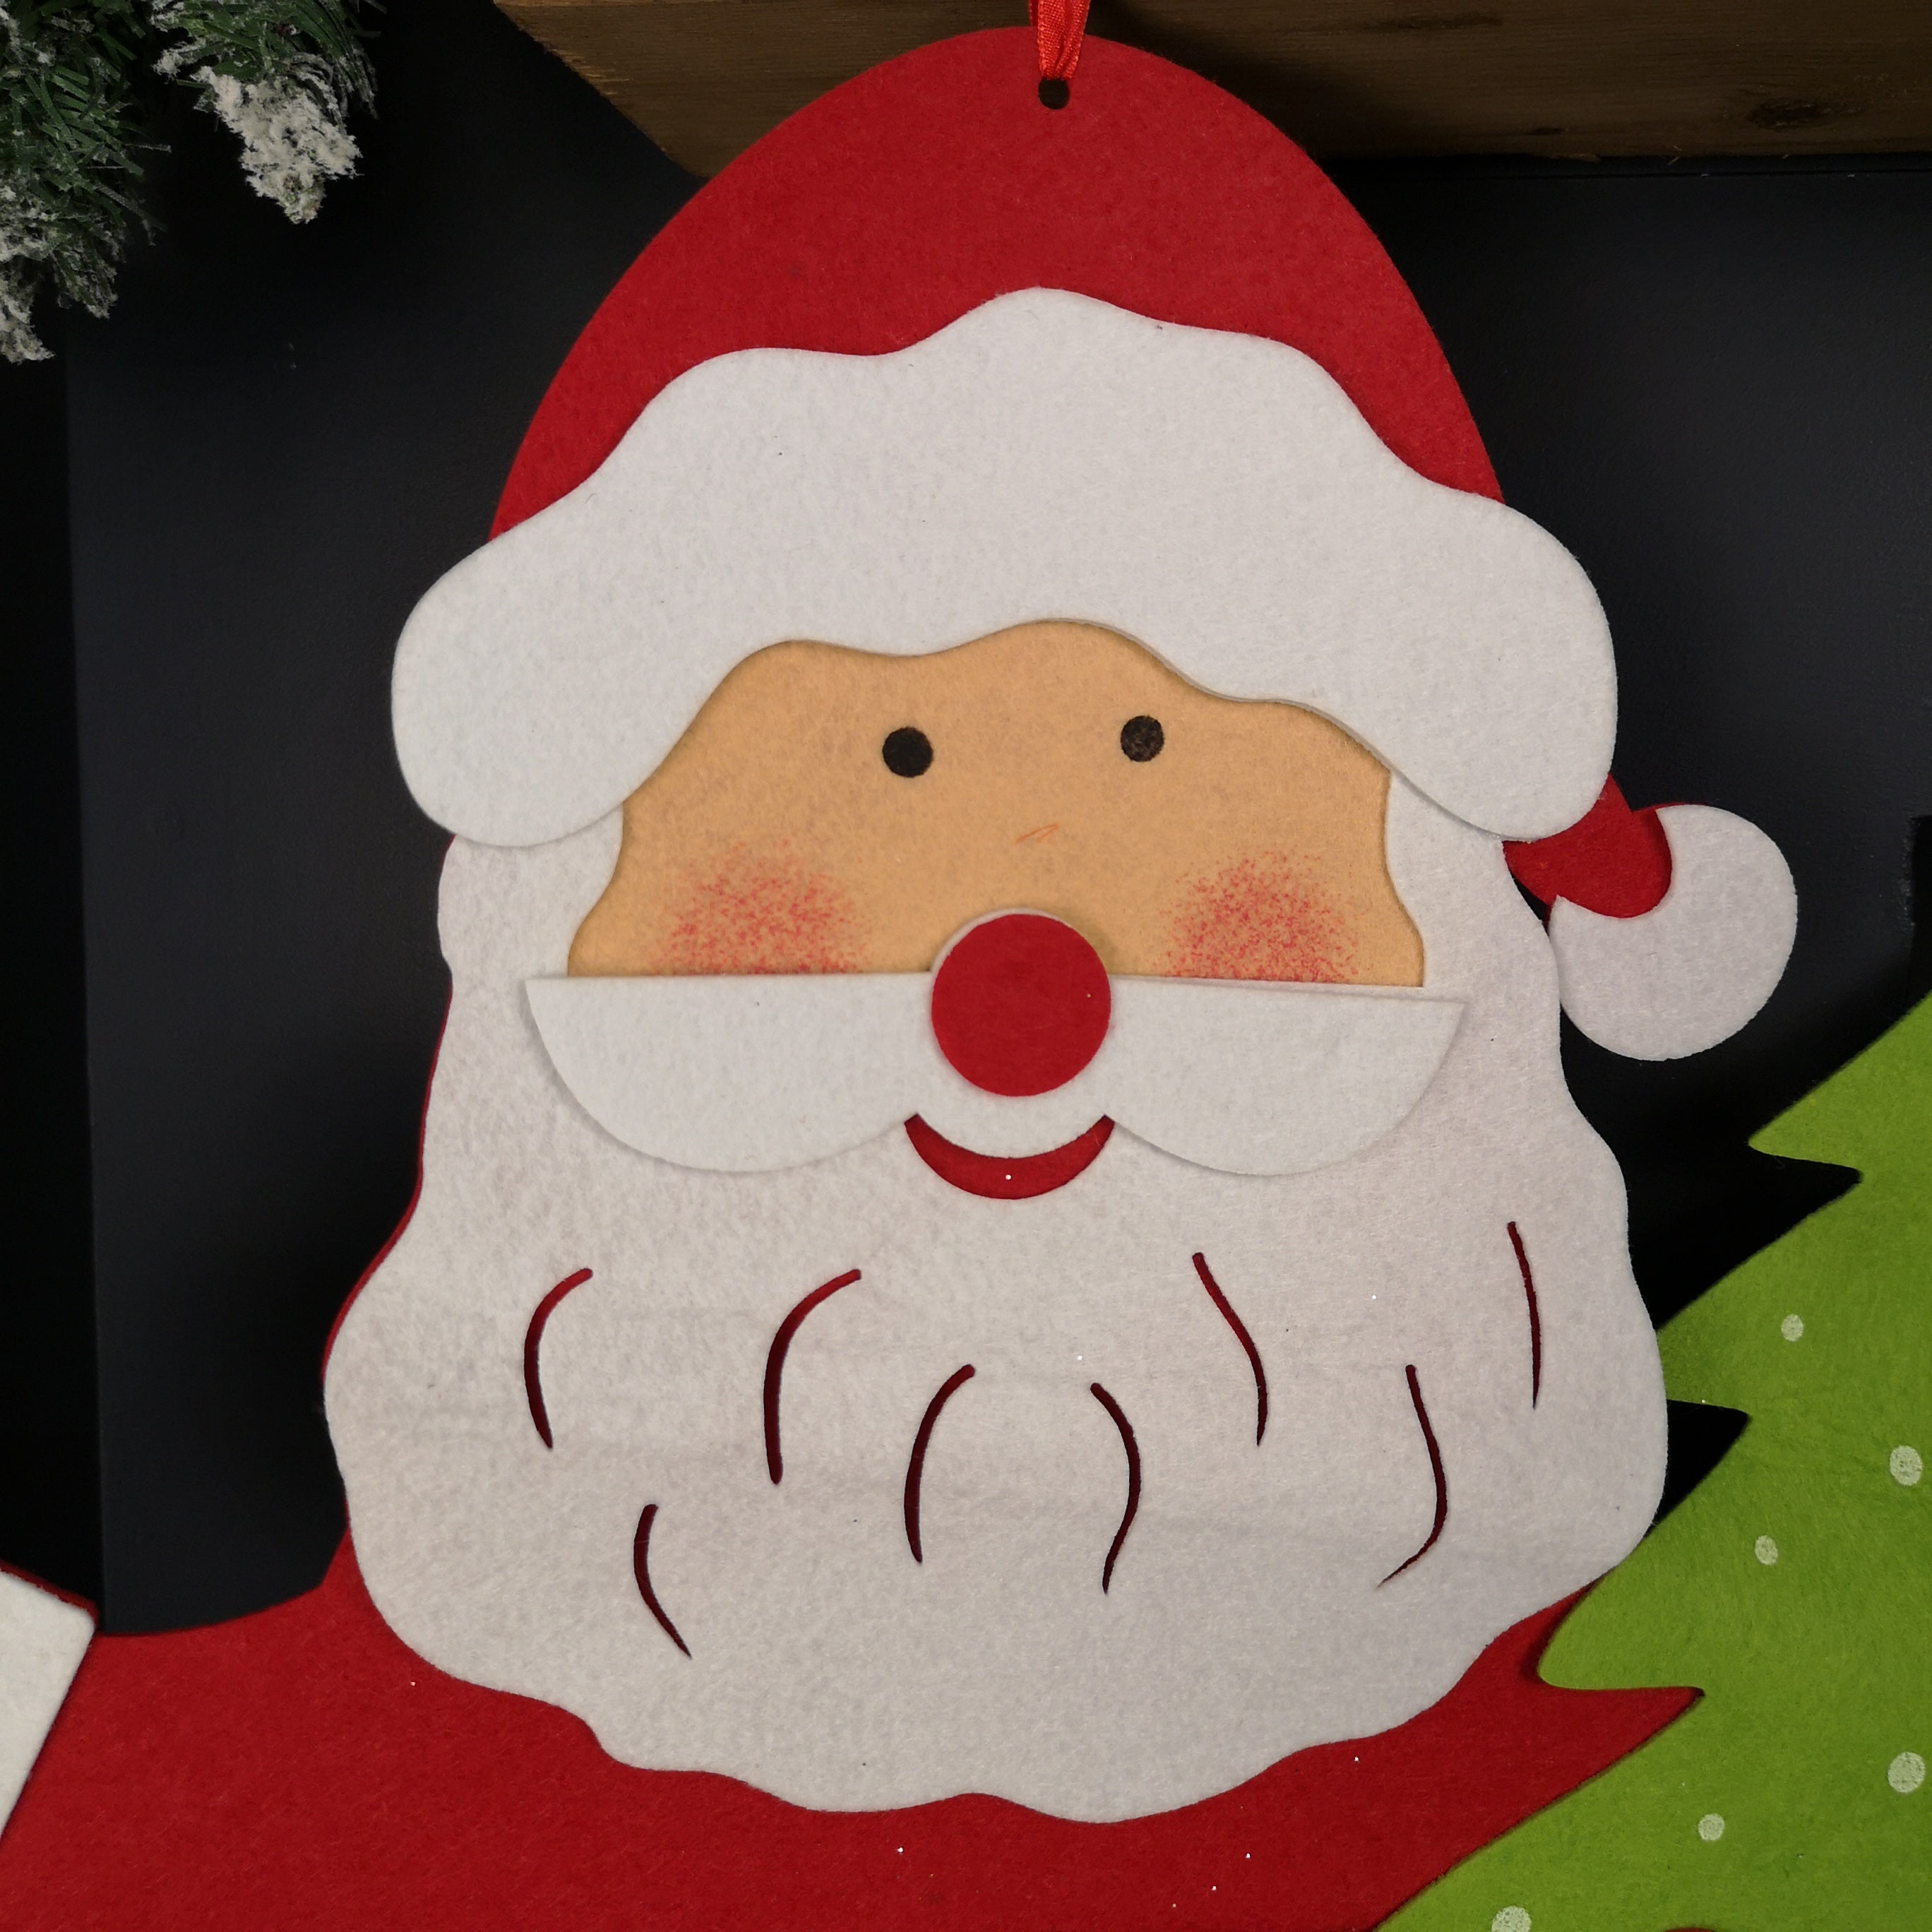 90cm Fabric Red and White Hanging Santa Advent Calendar Christmas Decoration